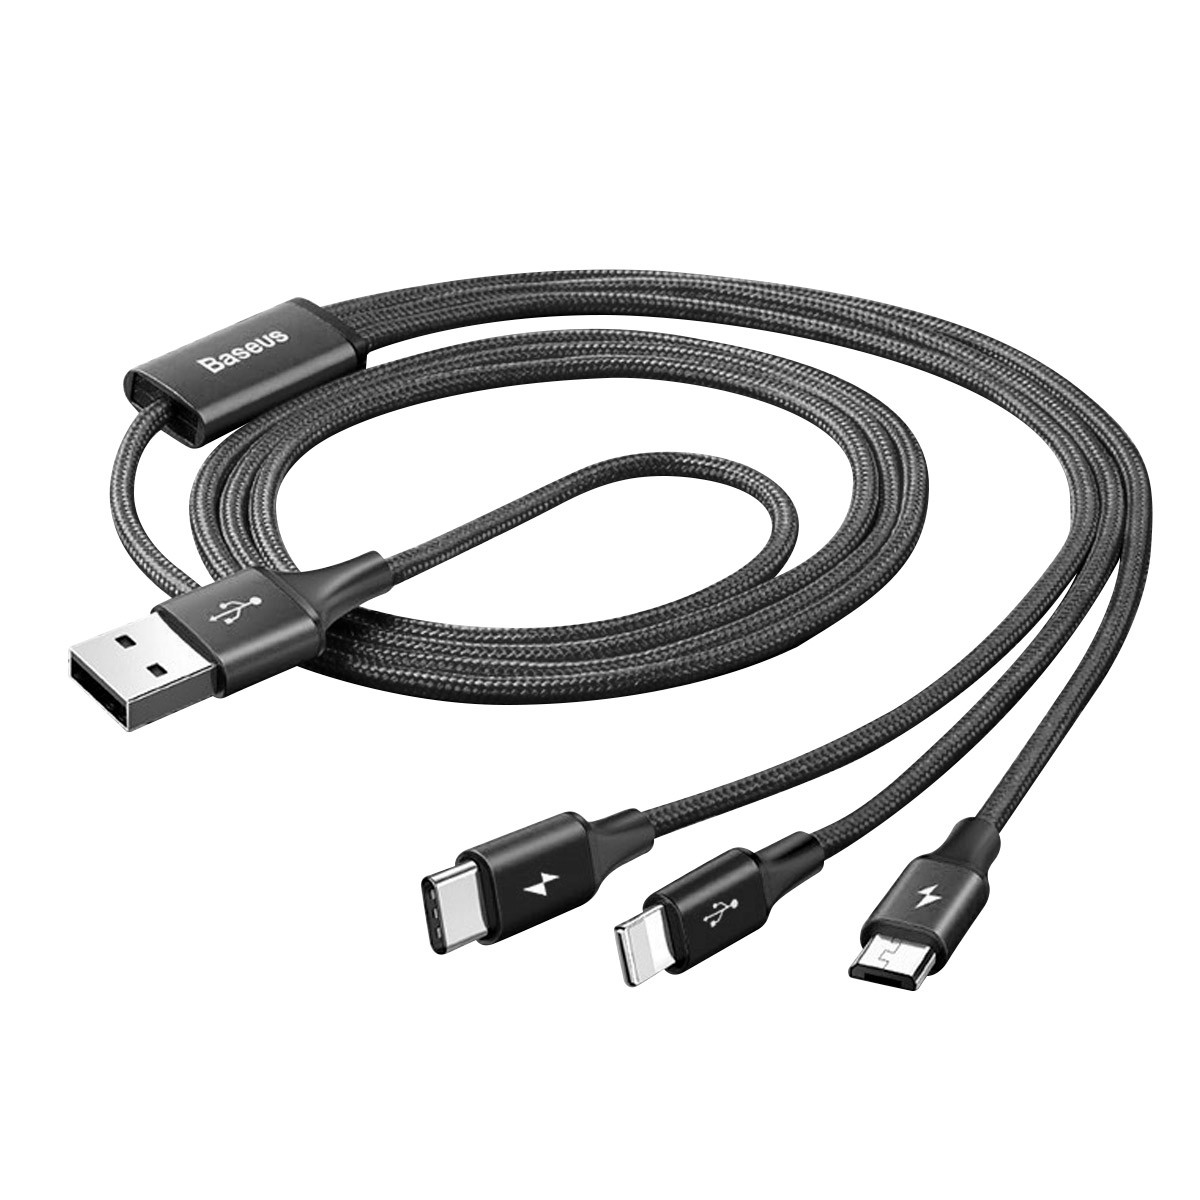 Câble USB-C vers Lightning (1 m/3,3 pi, noir)